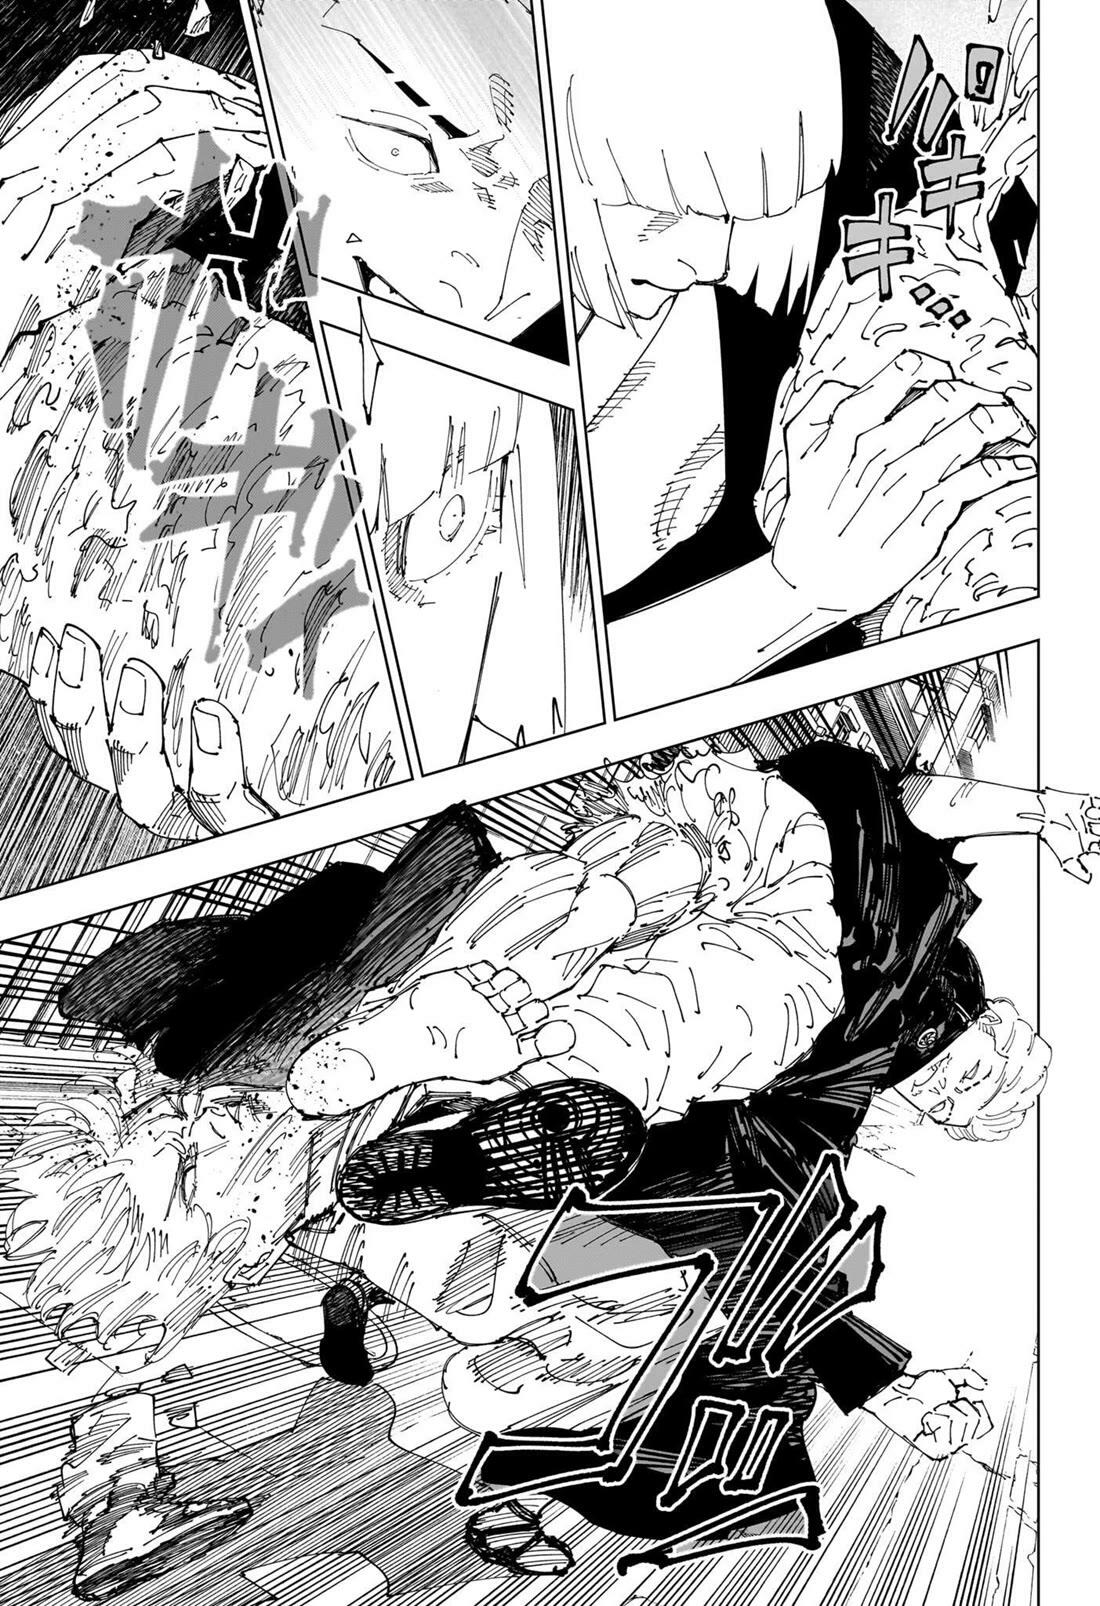 Jujutsu Kaisen Chapter 245: Chapter 245: The Decisive Battle In The Uninhabited, Demon-Infested Shinjuku ⑰ page 8 - Mangakakalot